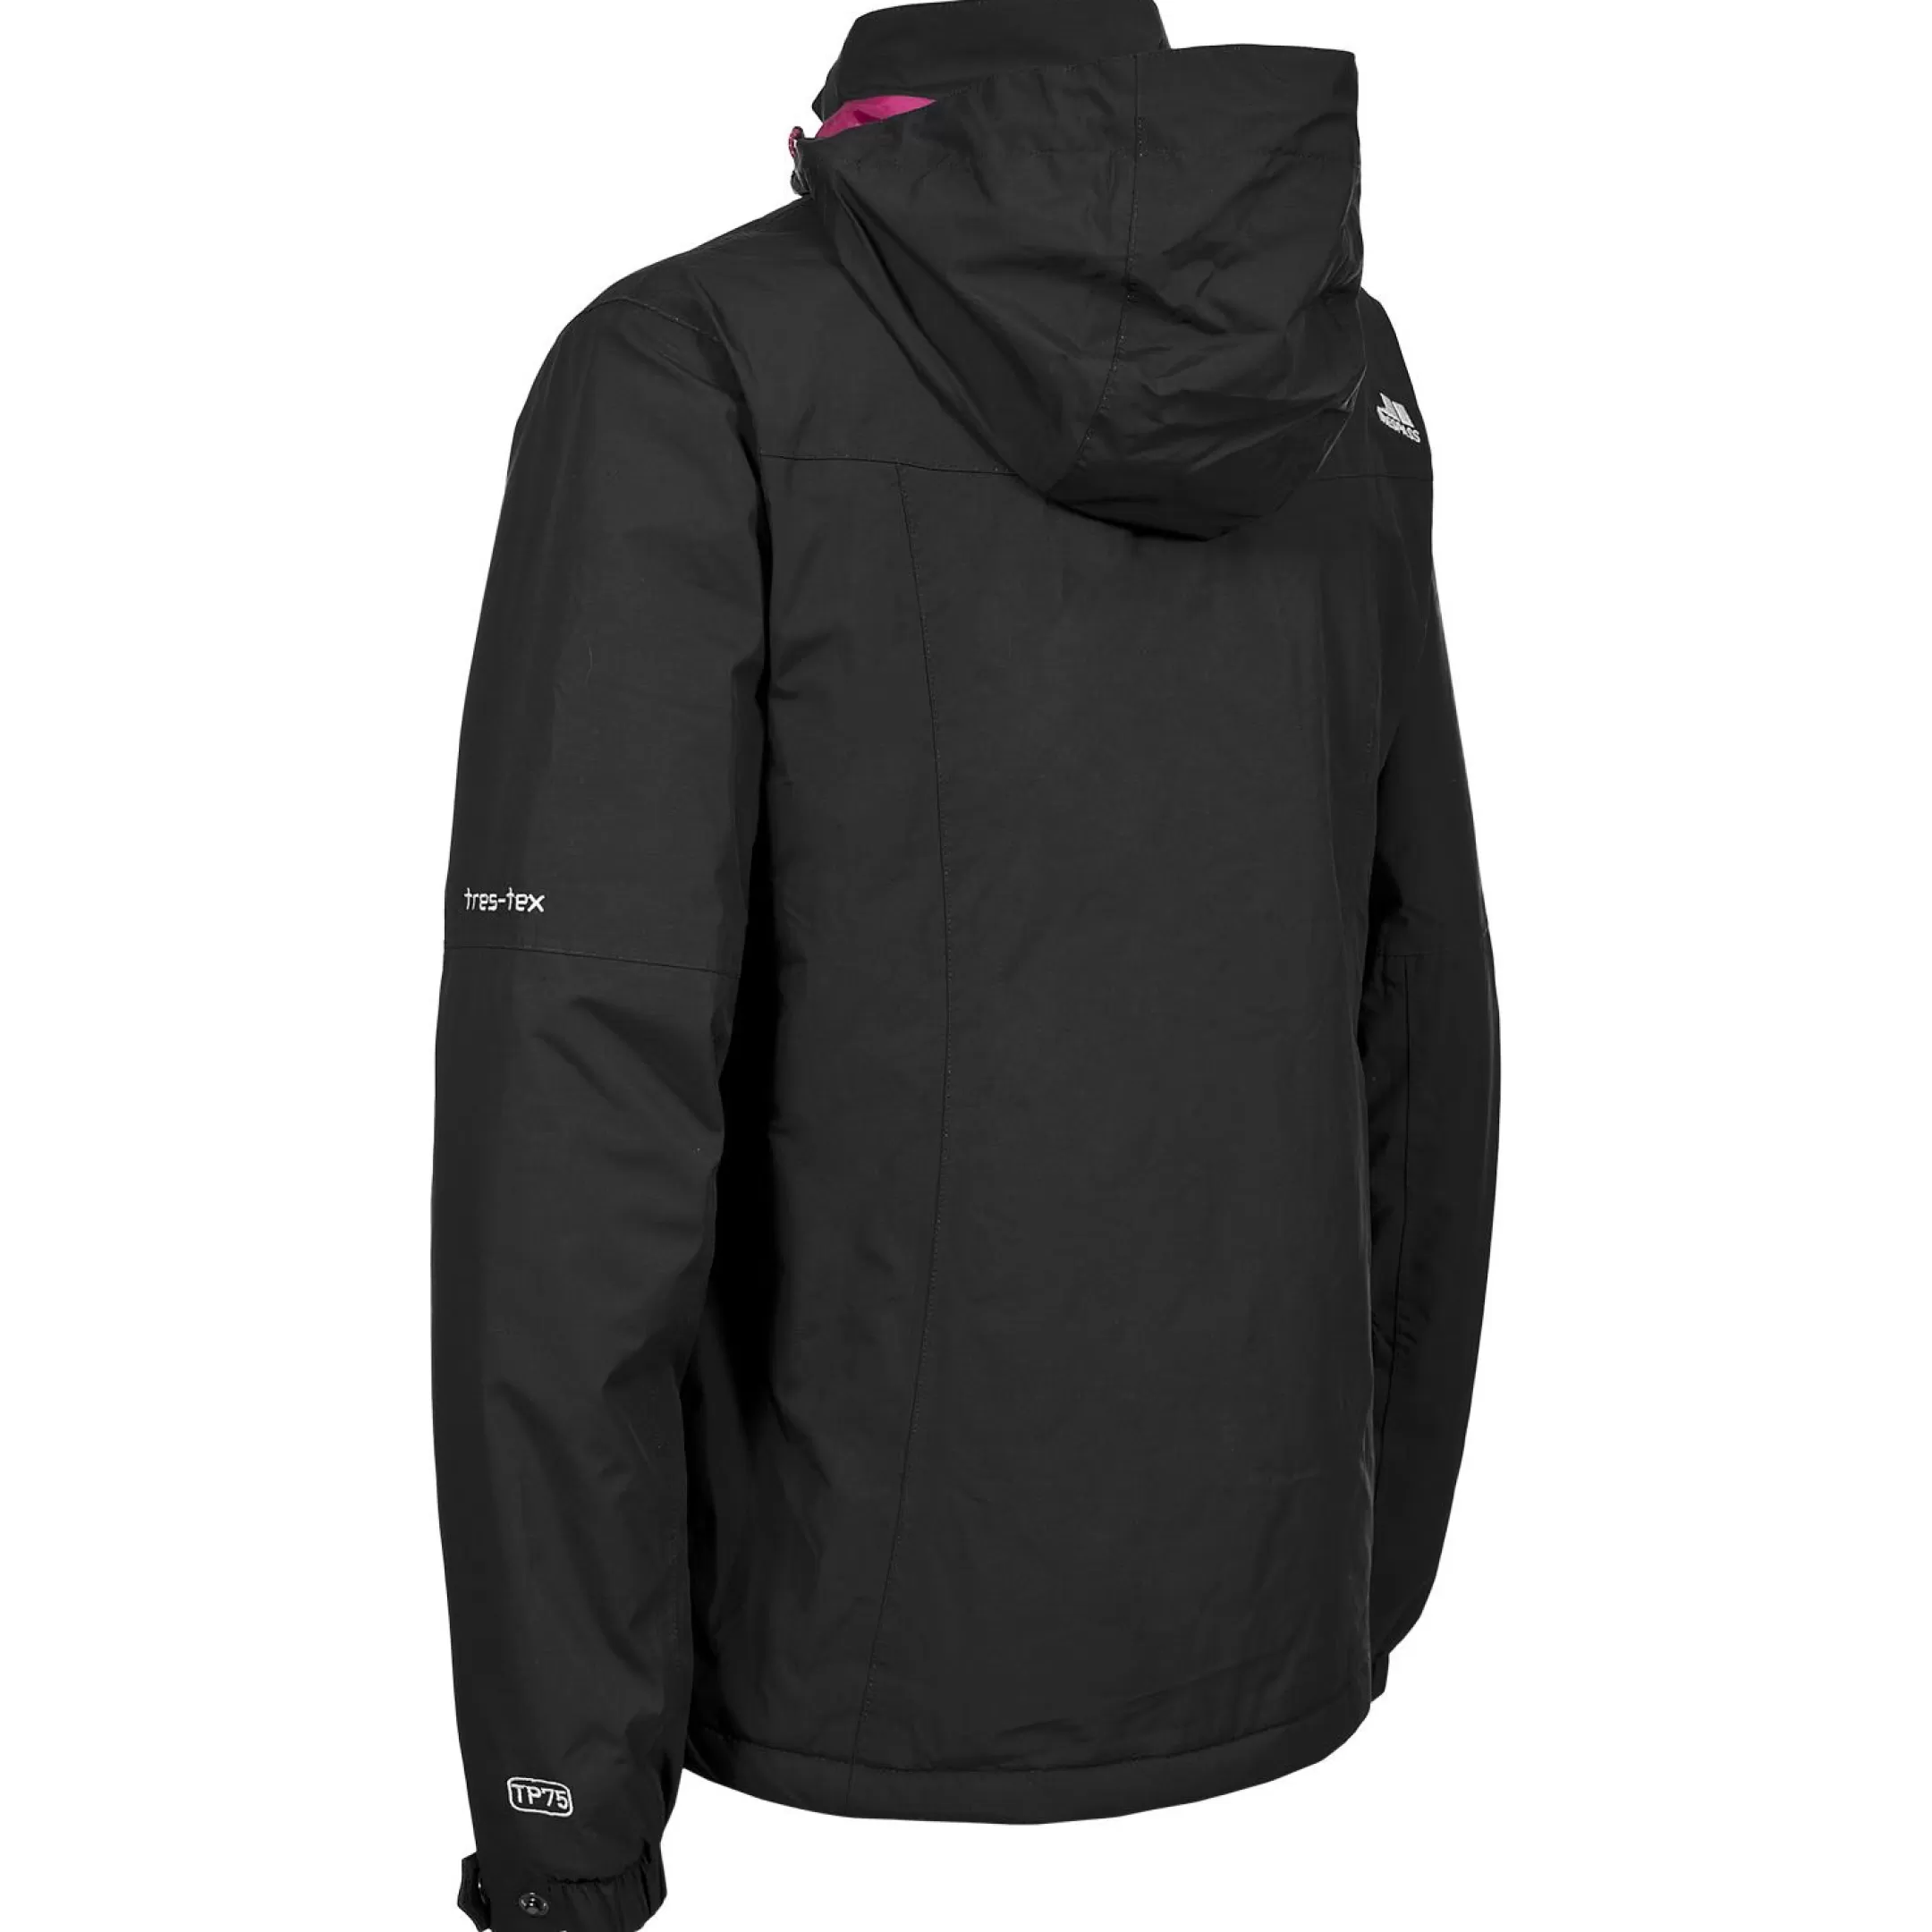 Womens Waterproof Jacket Malissa | Trespass Discount